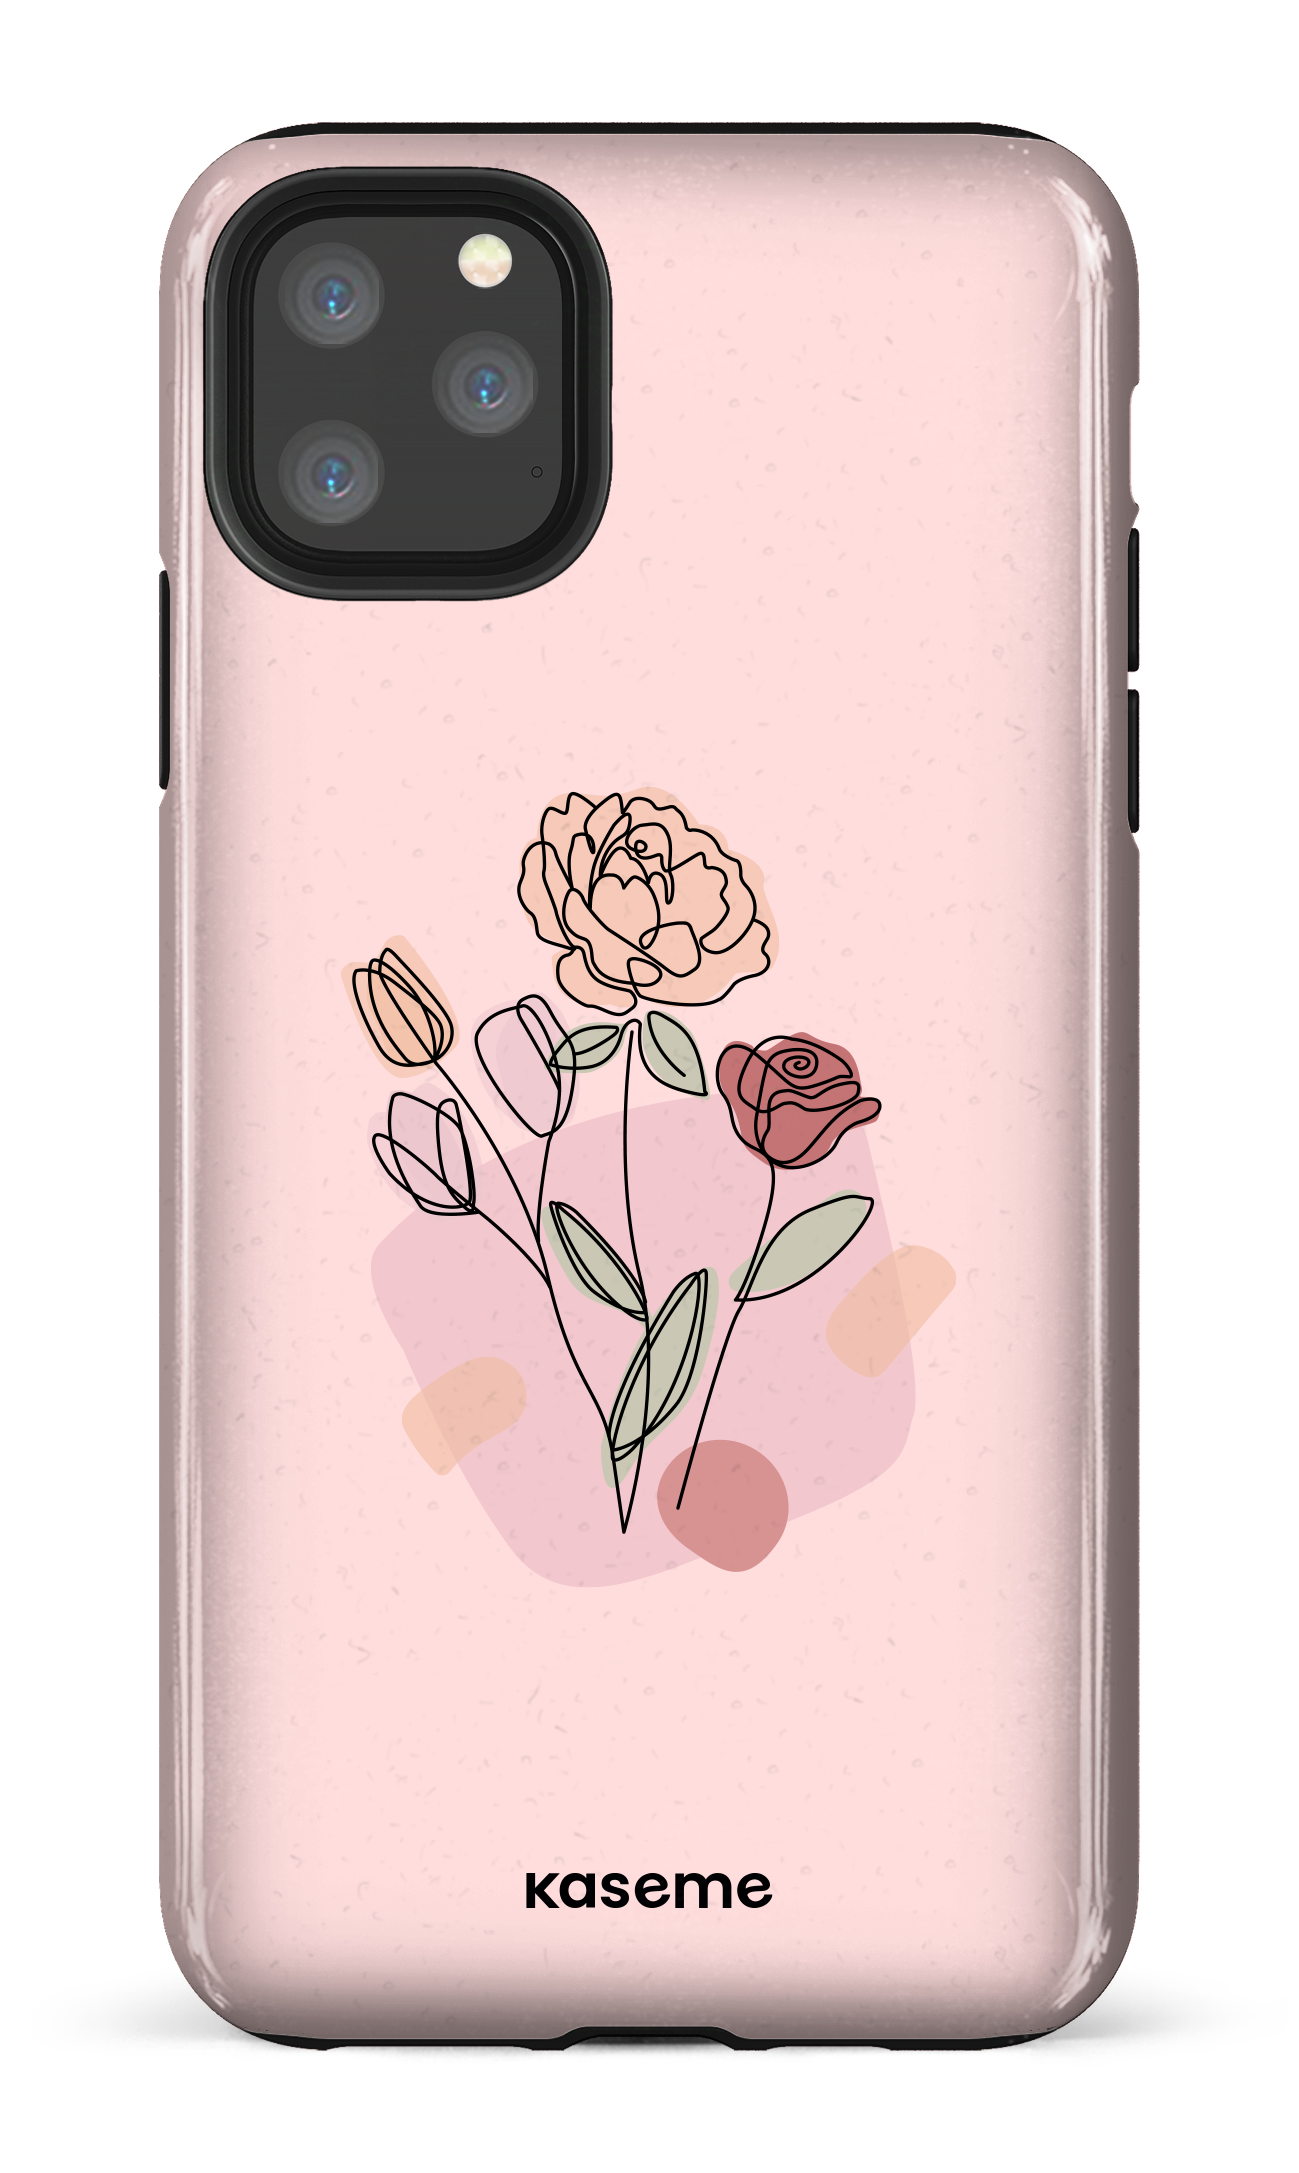 Spring memories pink - iPhone 11 Pro Max